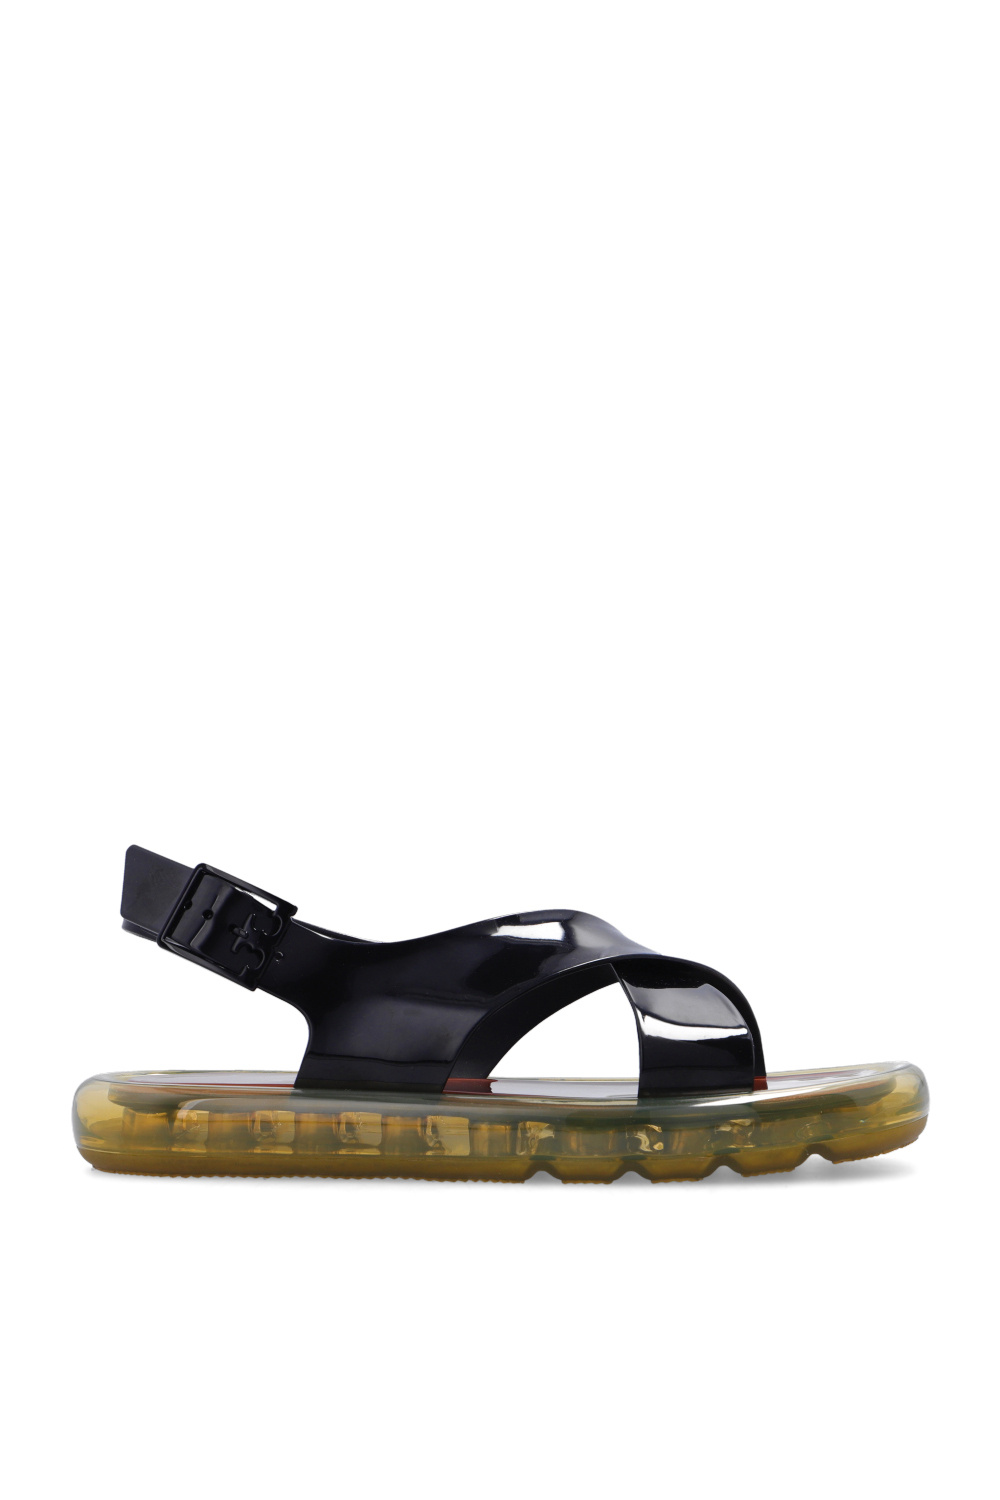 Black 'Bubble Jelly' rubber sandals Tory Burch - Vitkac France